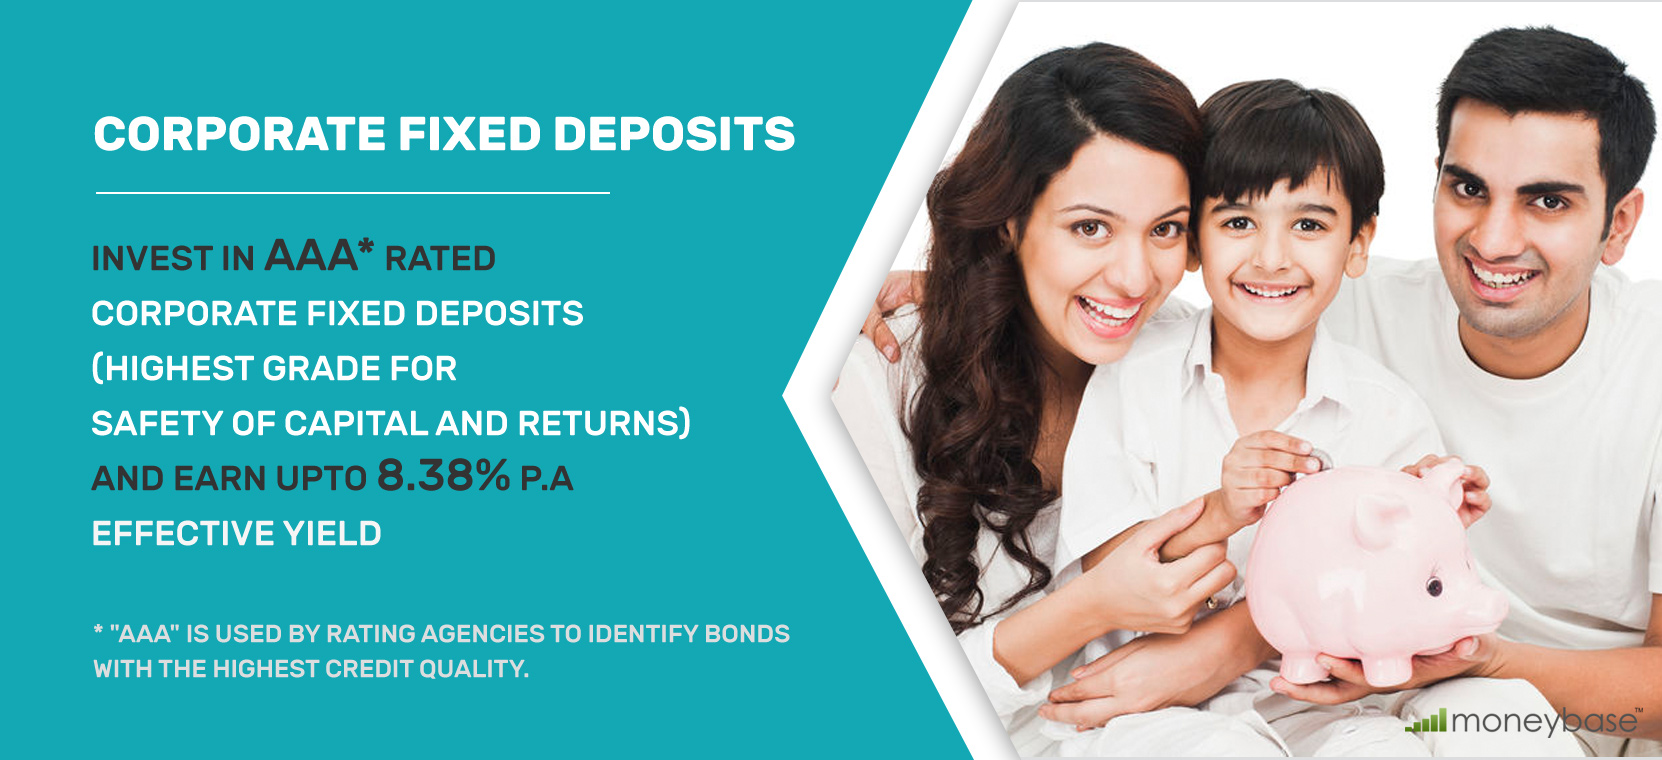 Moneybase Corporate Fixed Deposit Earn upto 8.38%